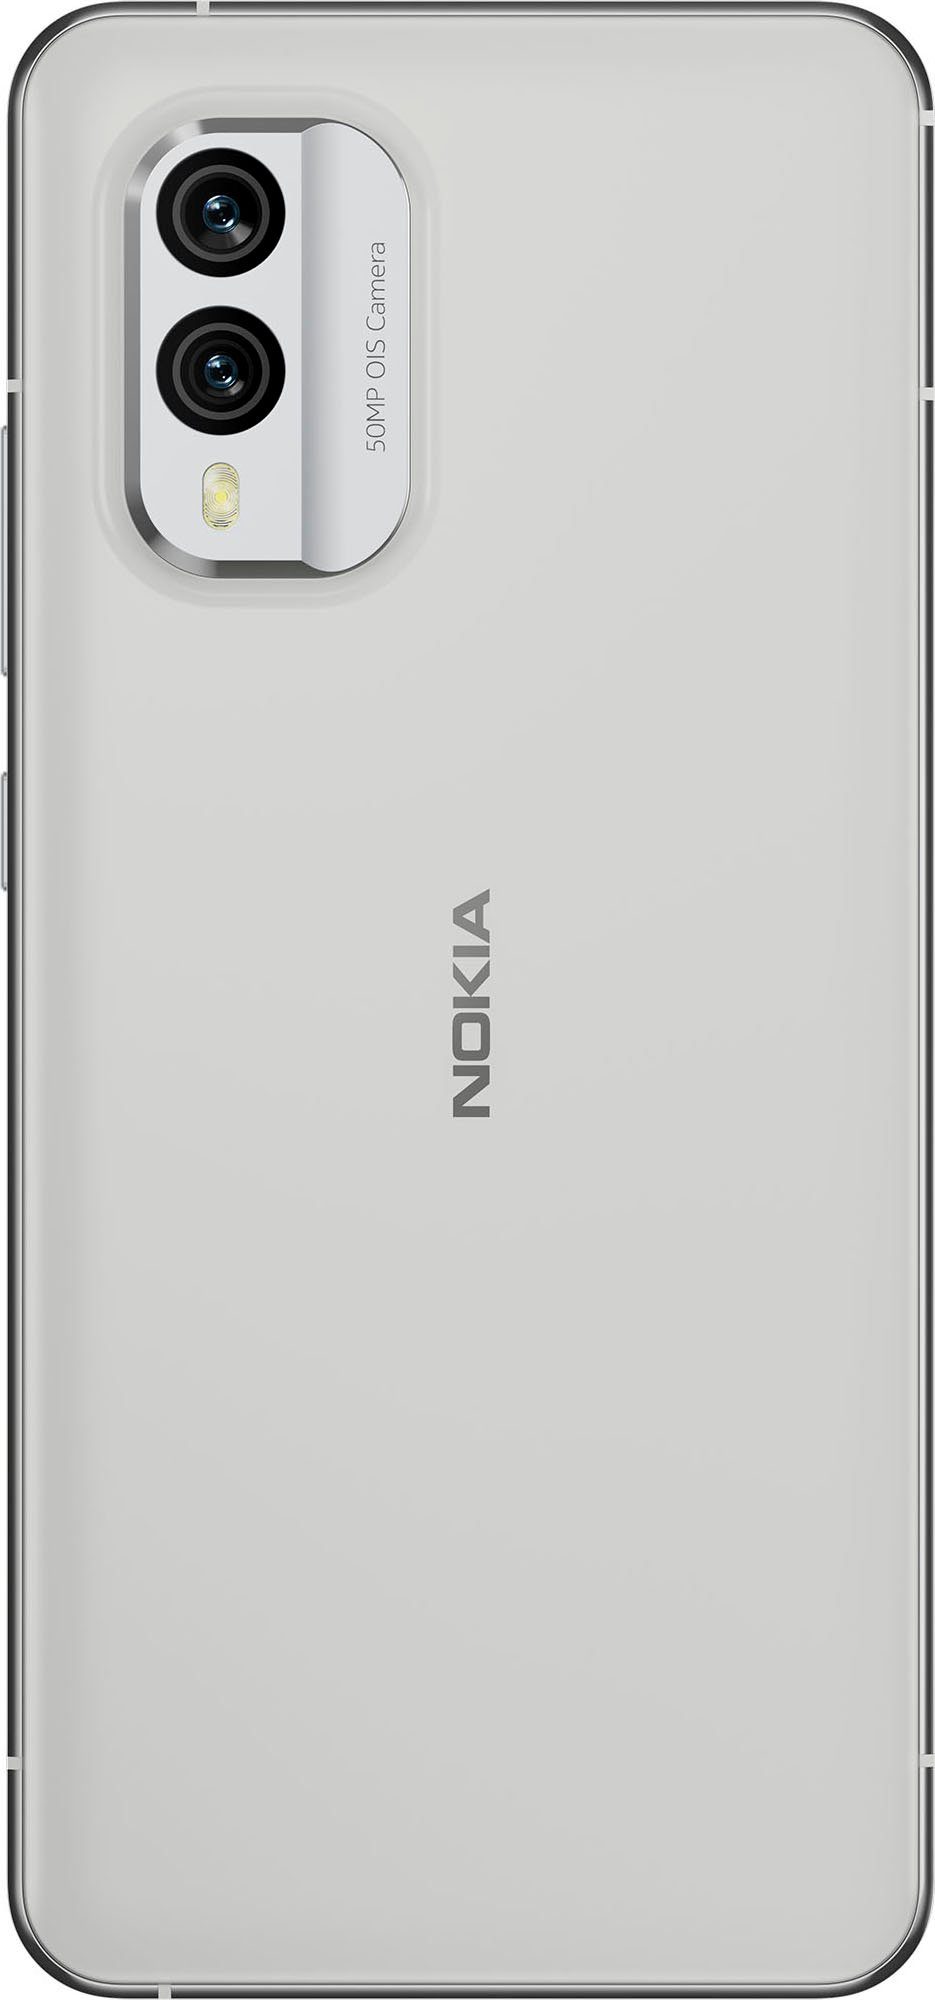 Nokia X30 5G Ice Smartphone Kamera) (16,33 GB cm/6,43 Zoll, Speicherplatz, MP 256 50 White